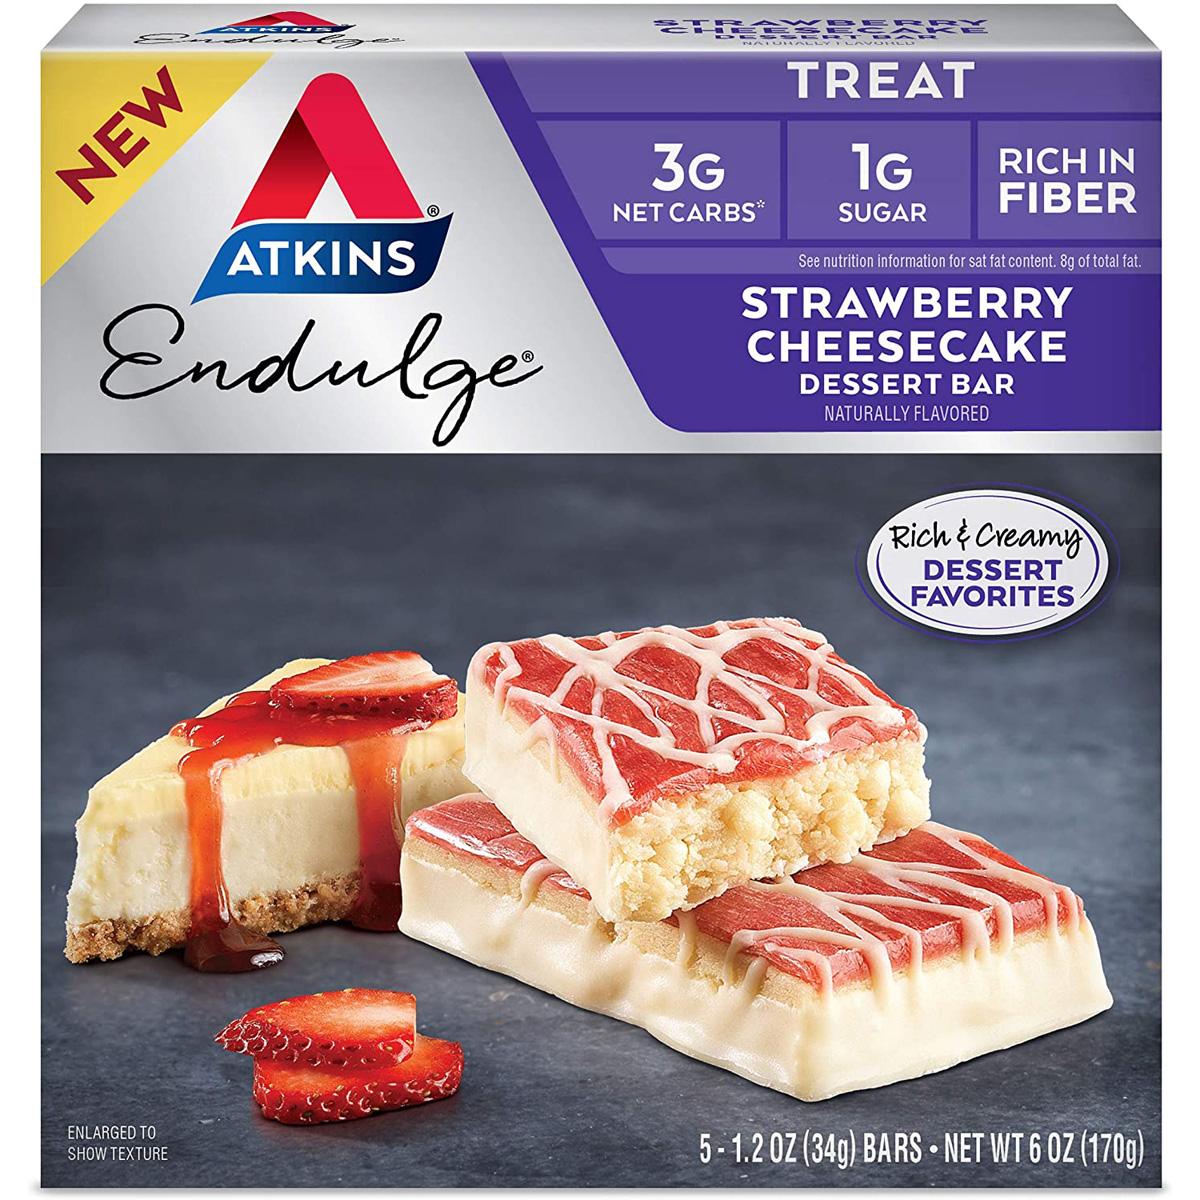 Atkins Endulge Treat Strawberry Cheesecake Dessert Bar for $3.63 Shipped